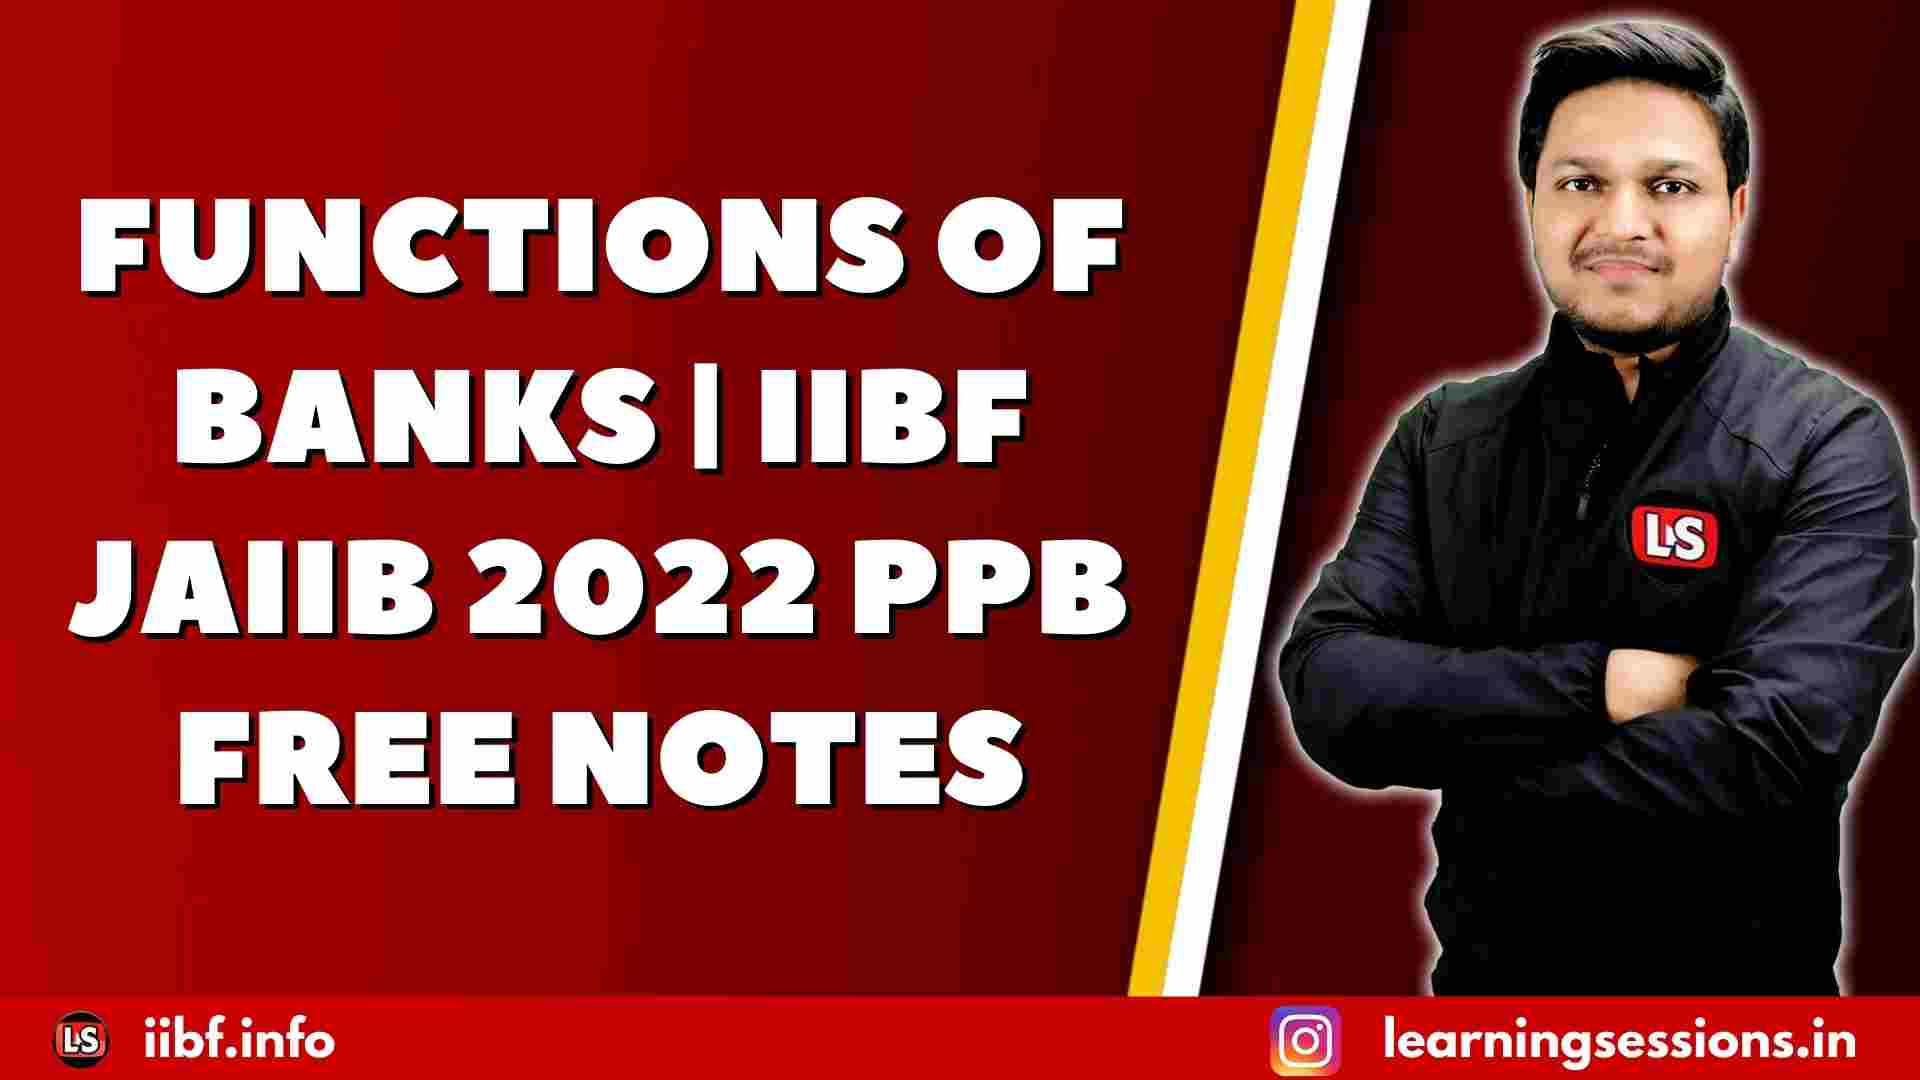 FUNCTIONS OF BANKS | IIBF JAIIB 2022 PPB FREE NOTES